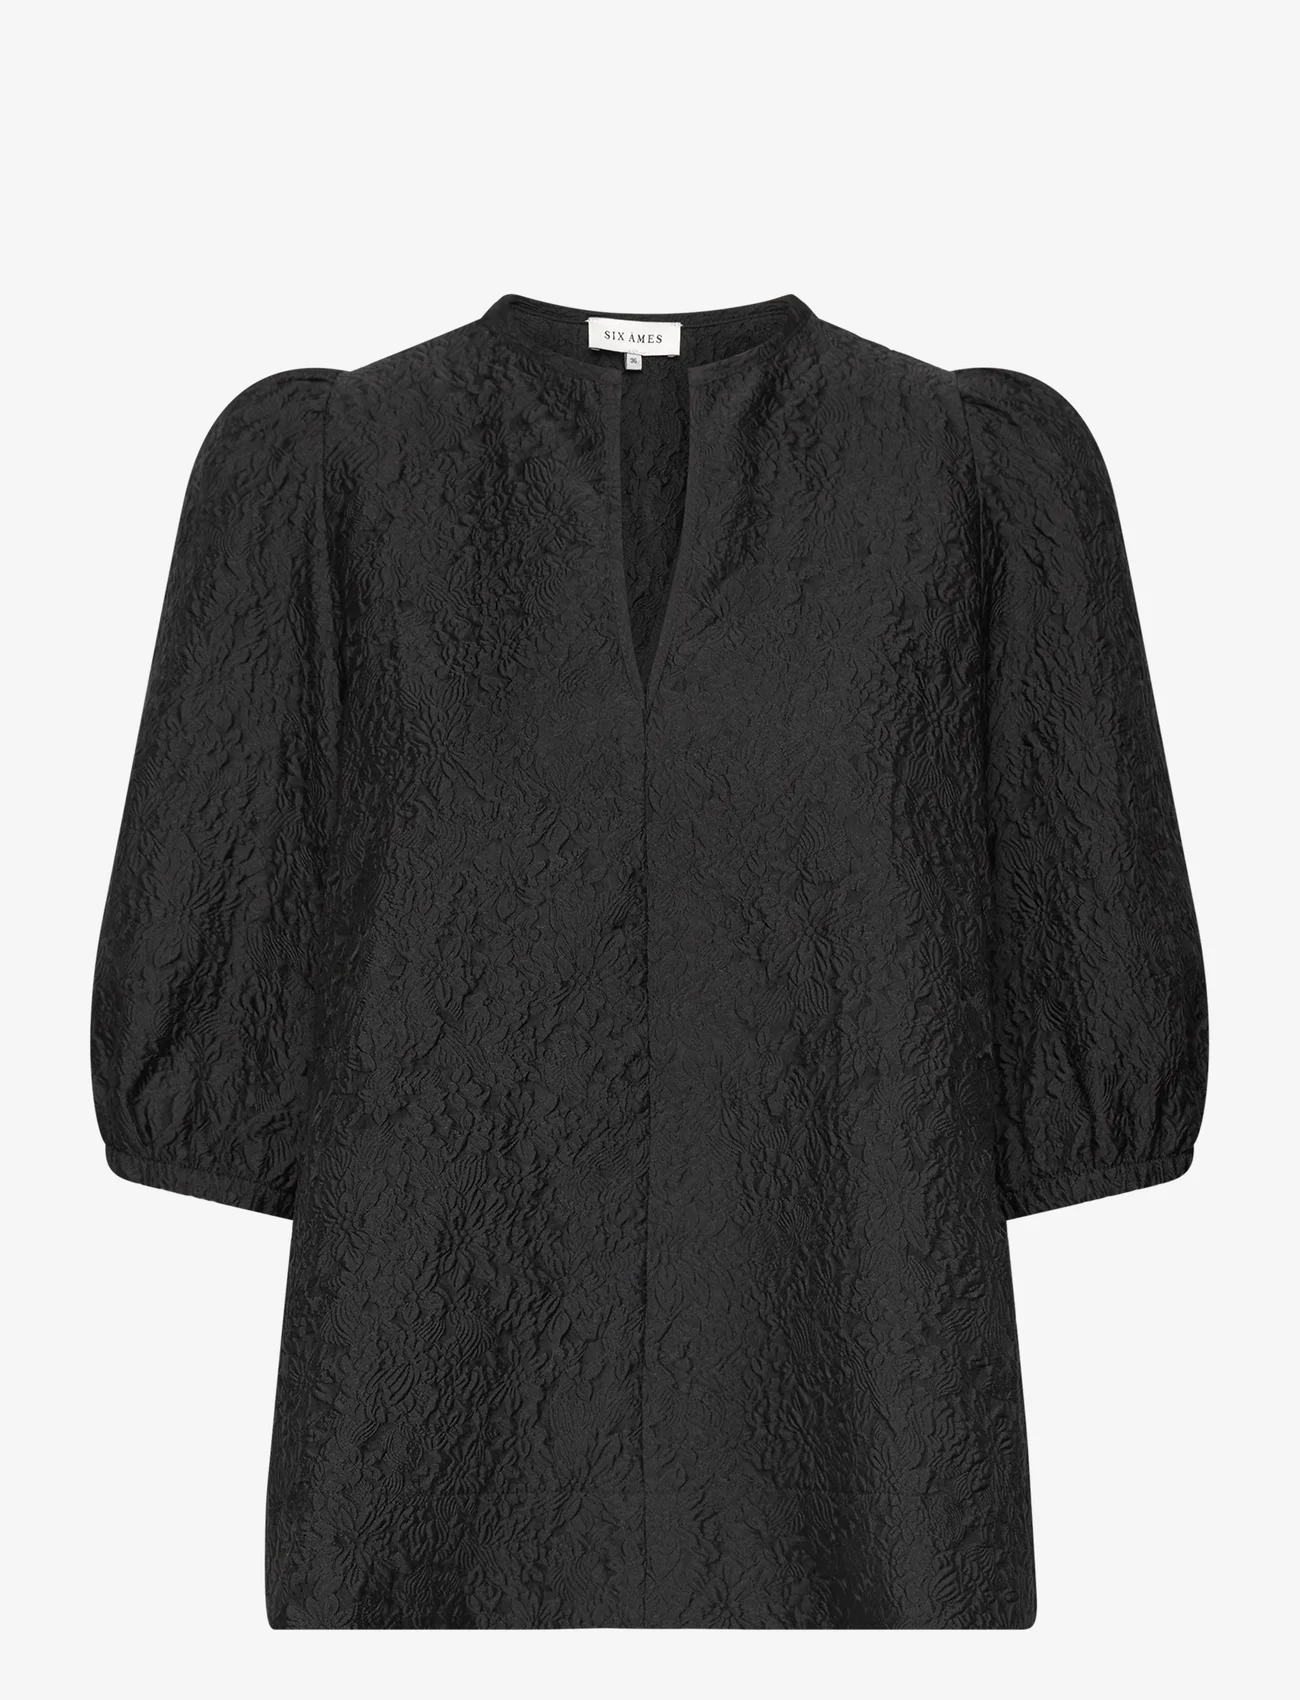 Six Ames - OLIVIAN - blouses korte mouwen - black - 0